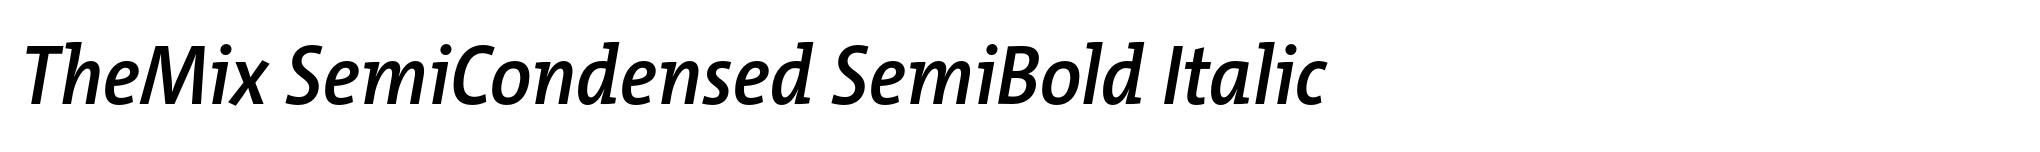 TheMix SemiCondensed SemiBold Italic image